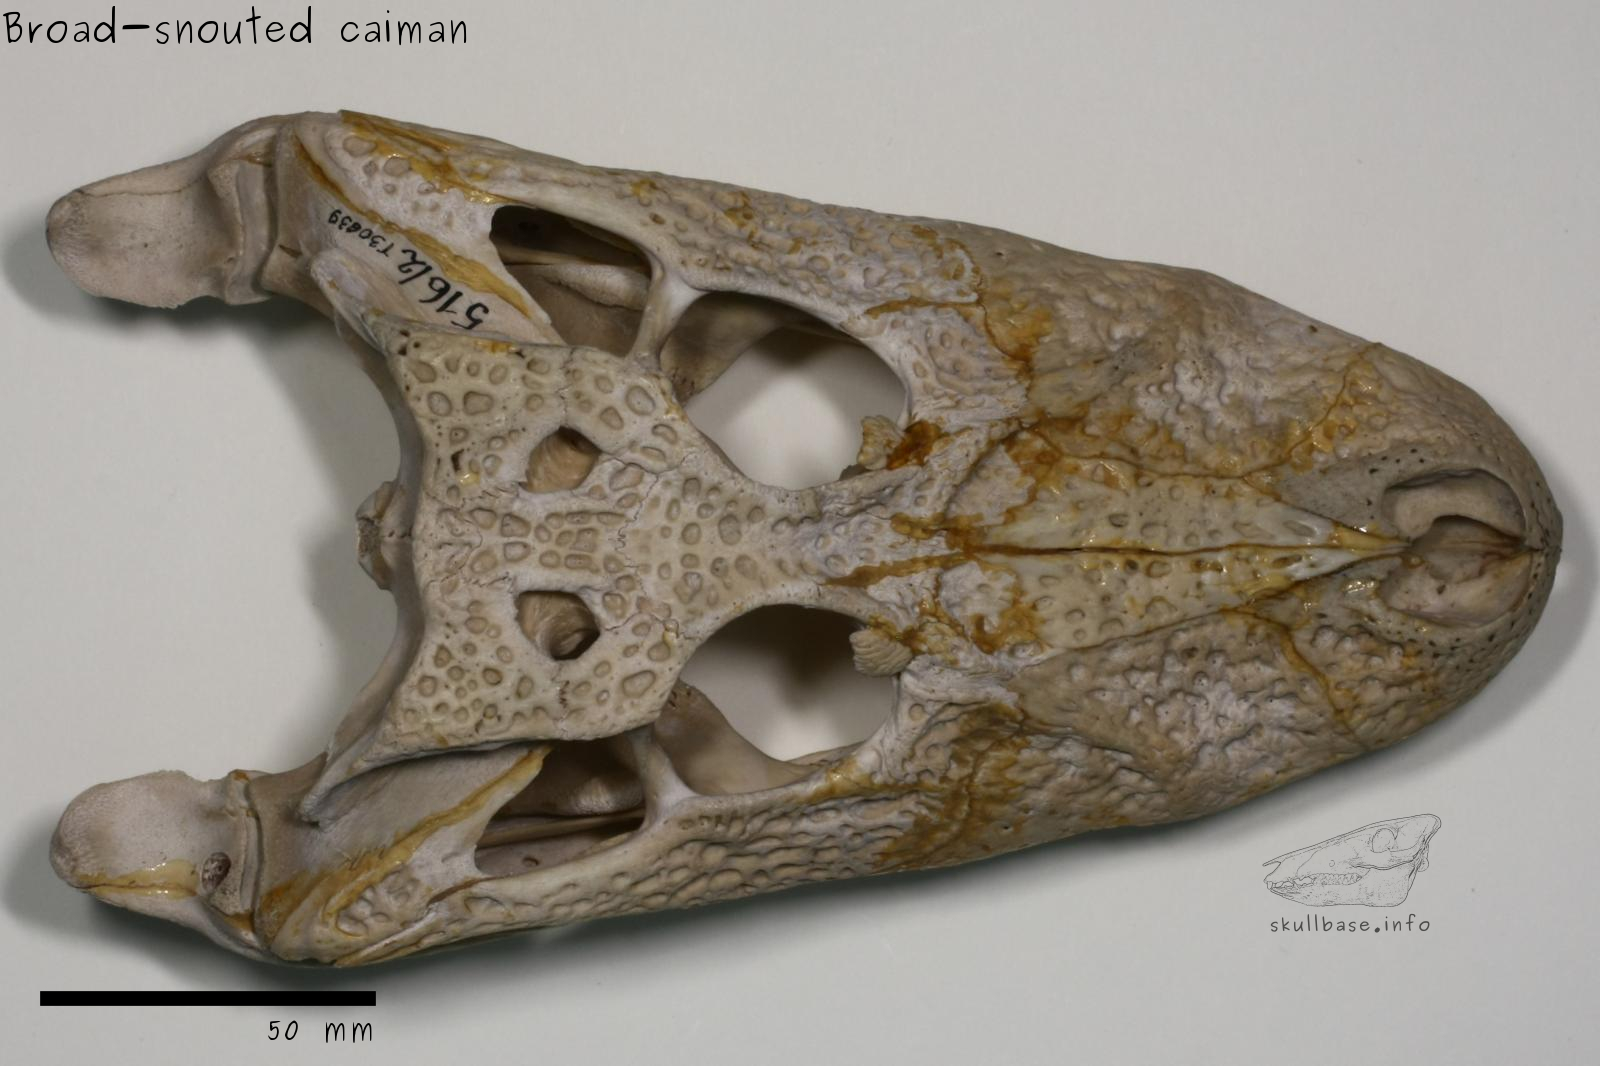 Broad-snouted caiman (Caiman latirostris) skull dorsal view